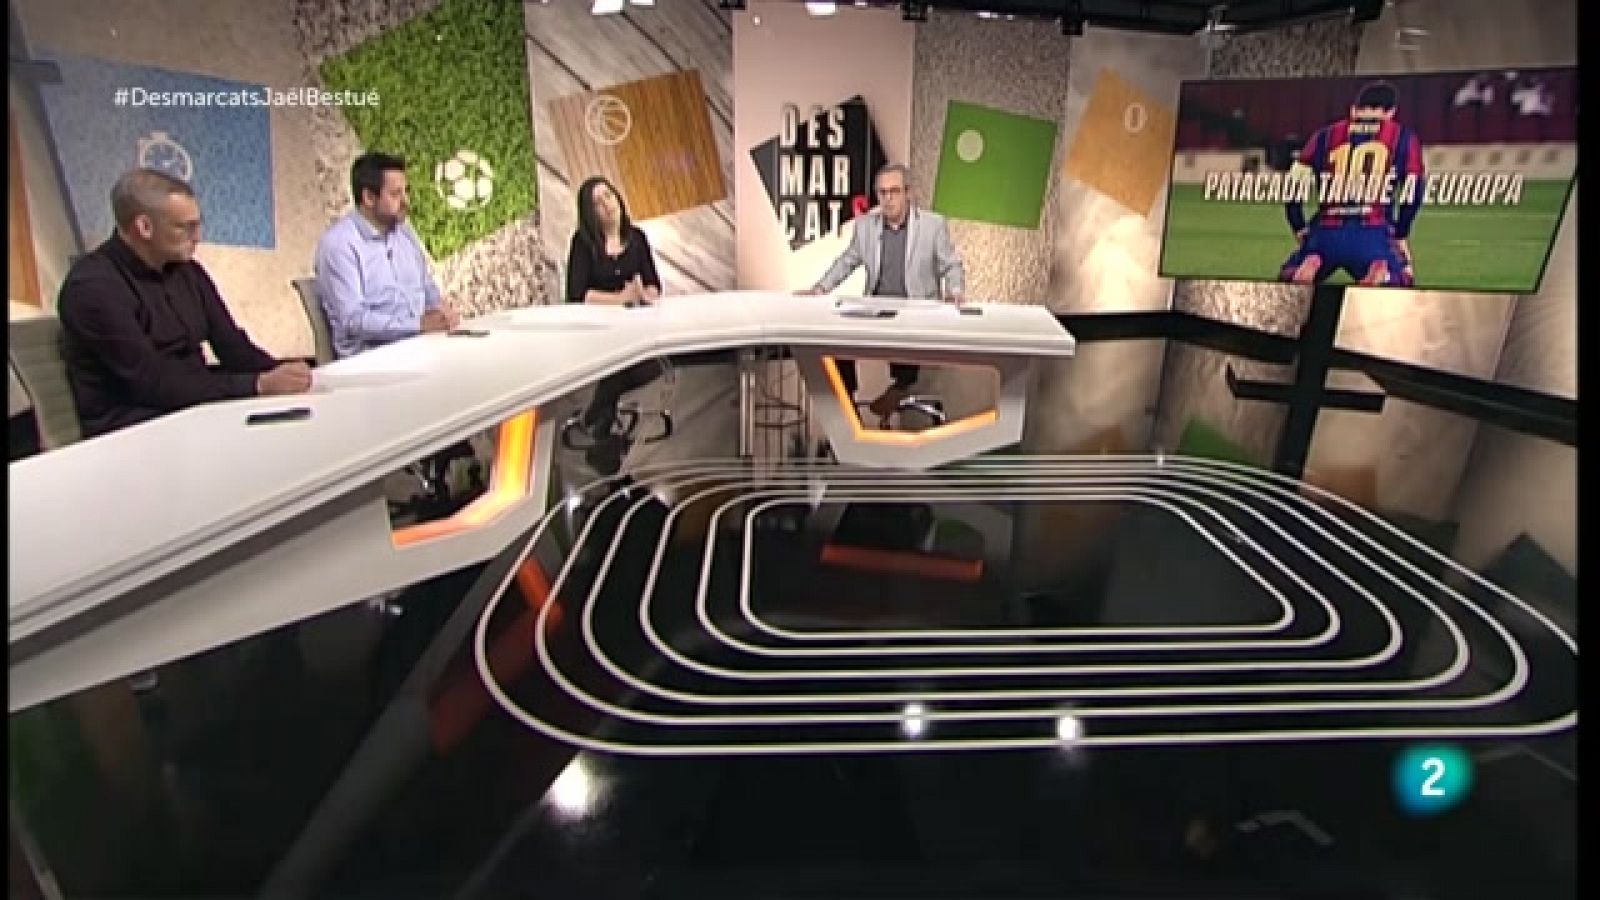 Desmarcats | Tertúlia Esportiva: Patacada també a Europa - RTVE Catalunya